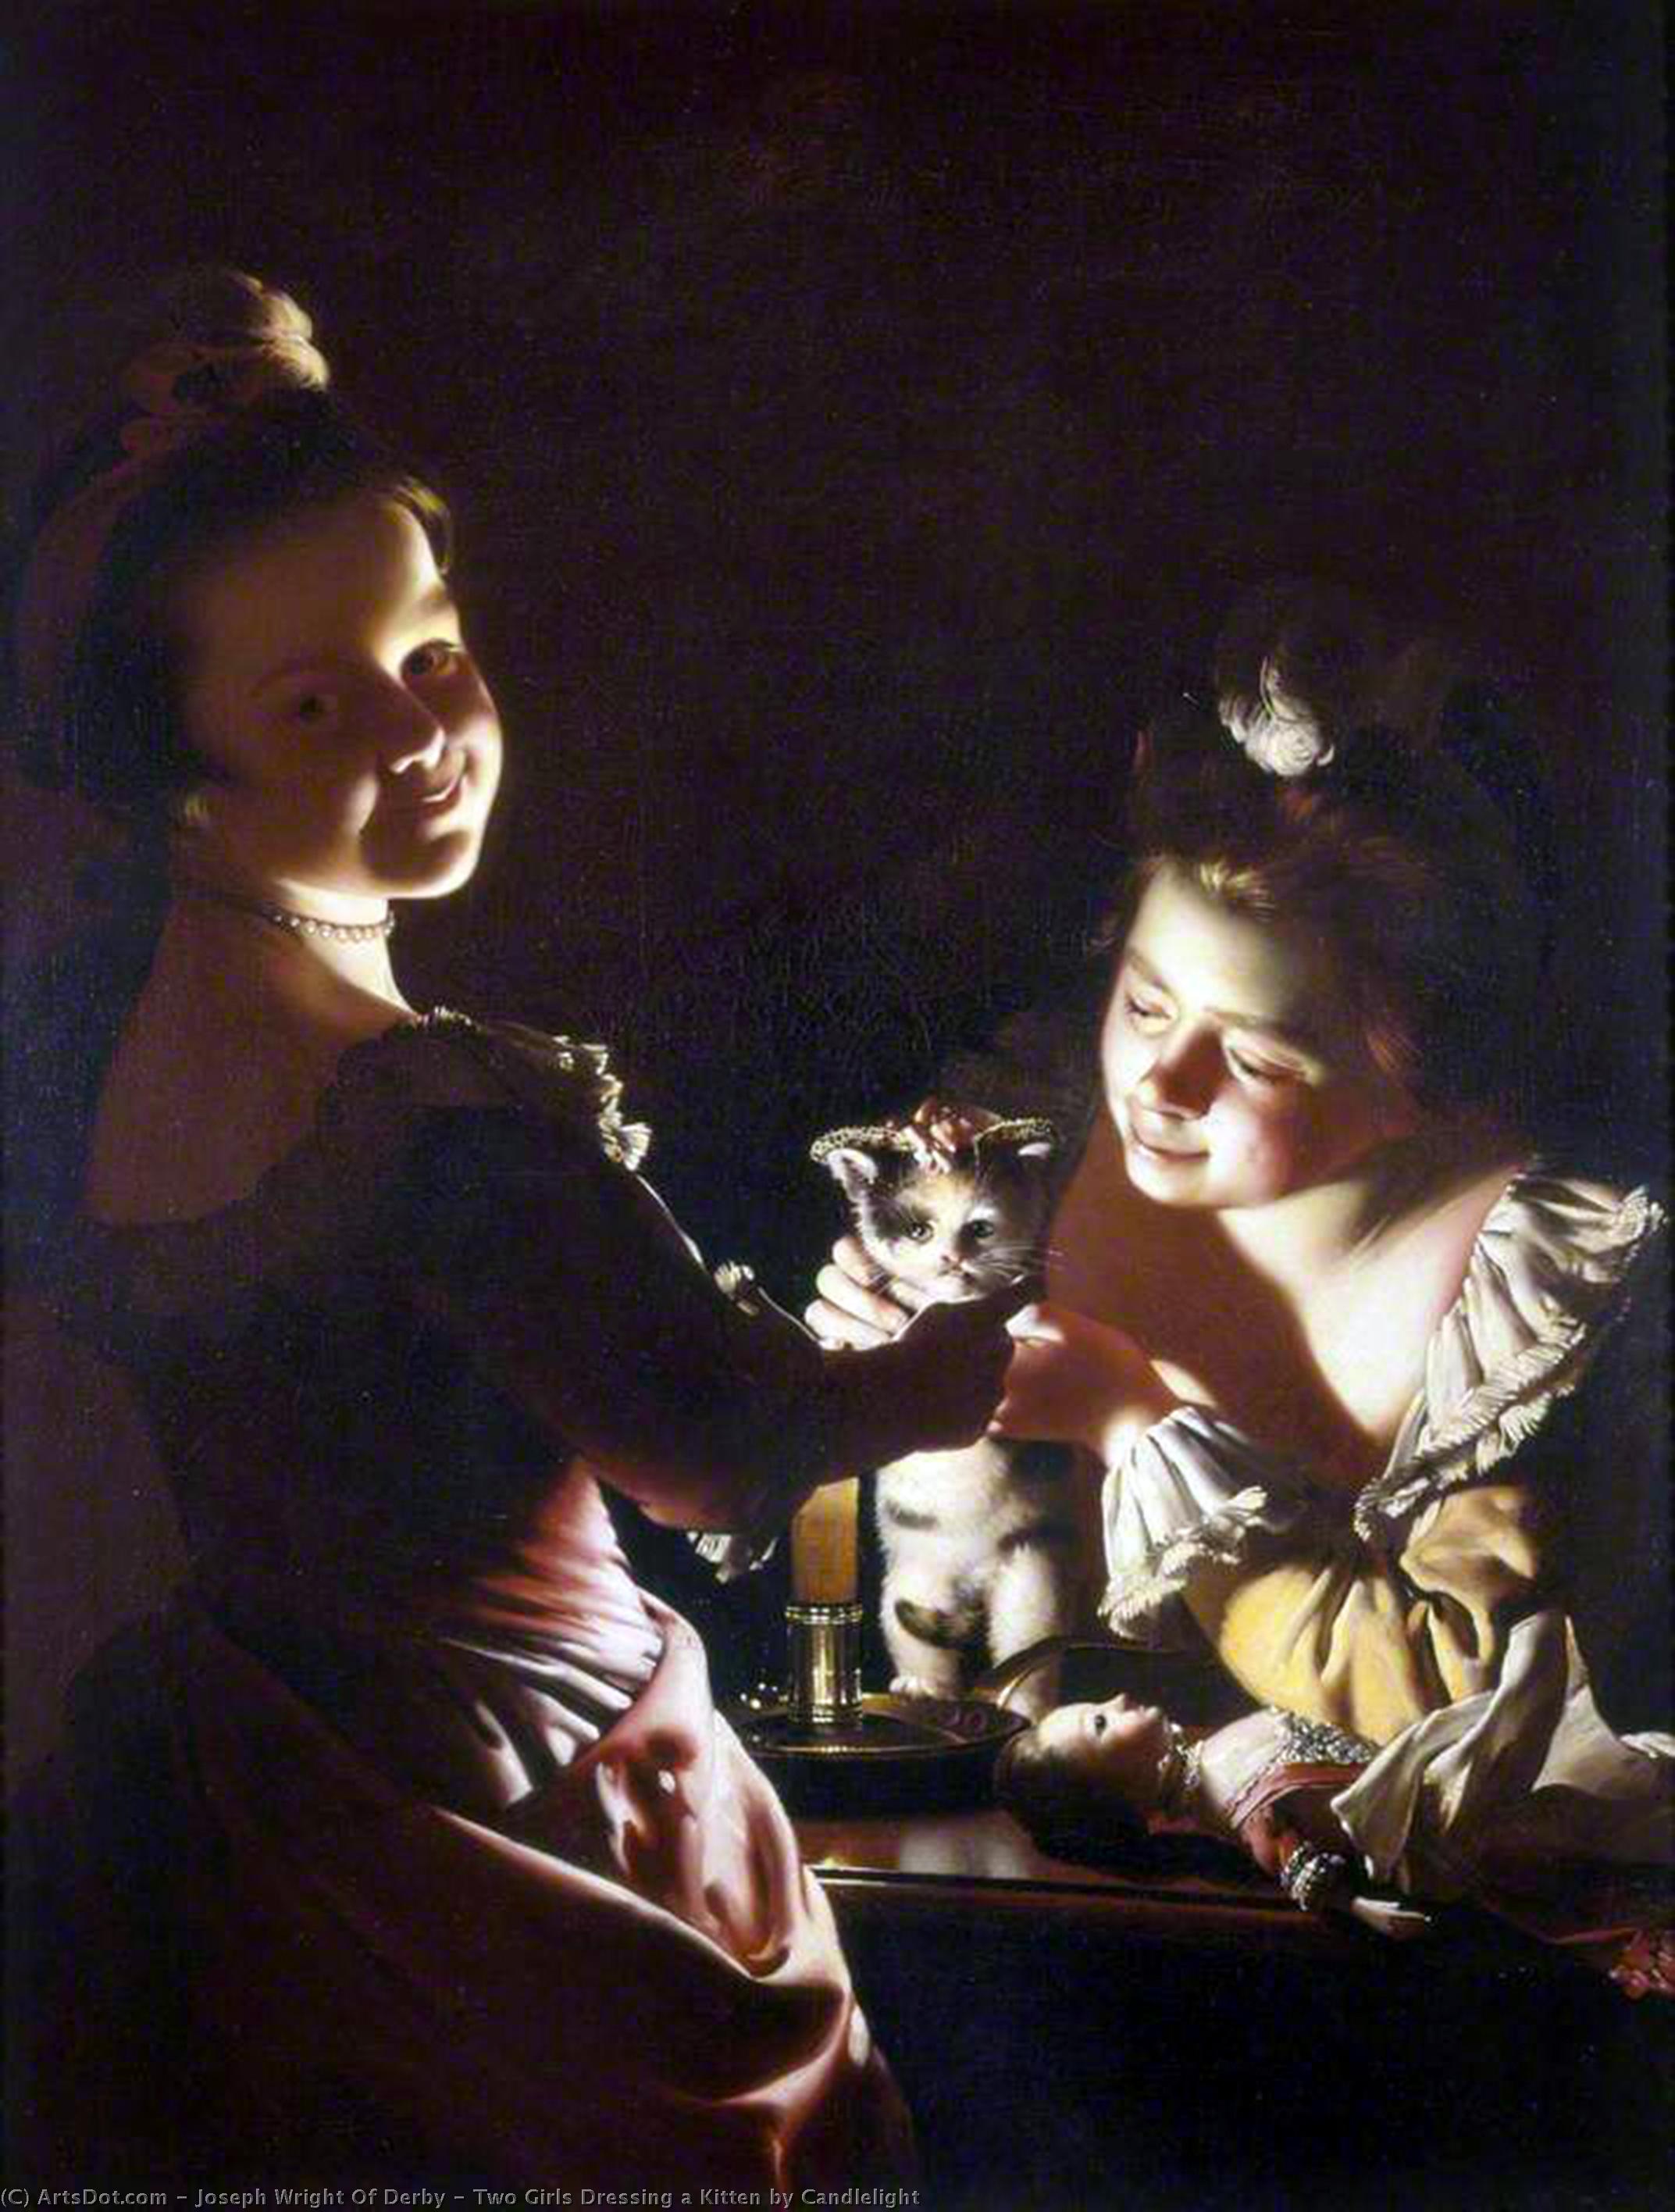 WikiOO.org - Enciclopédia das Belas Artes - Pintura, Arte por Joseph Wright Of Derby - Two Girls Dressing a Kitten by Candlelight